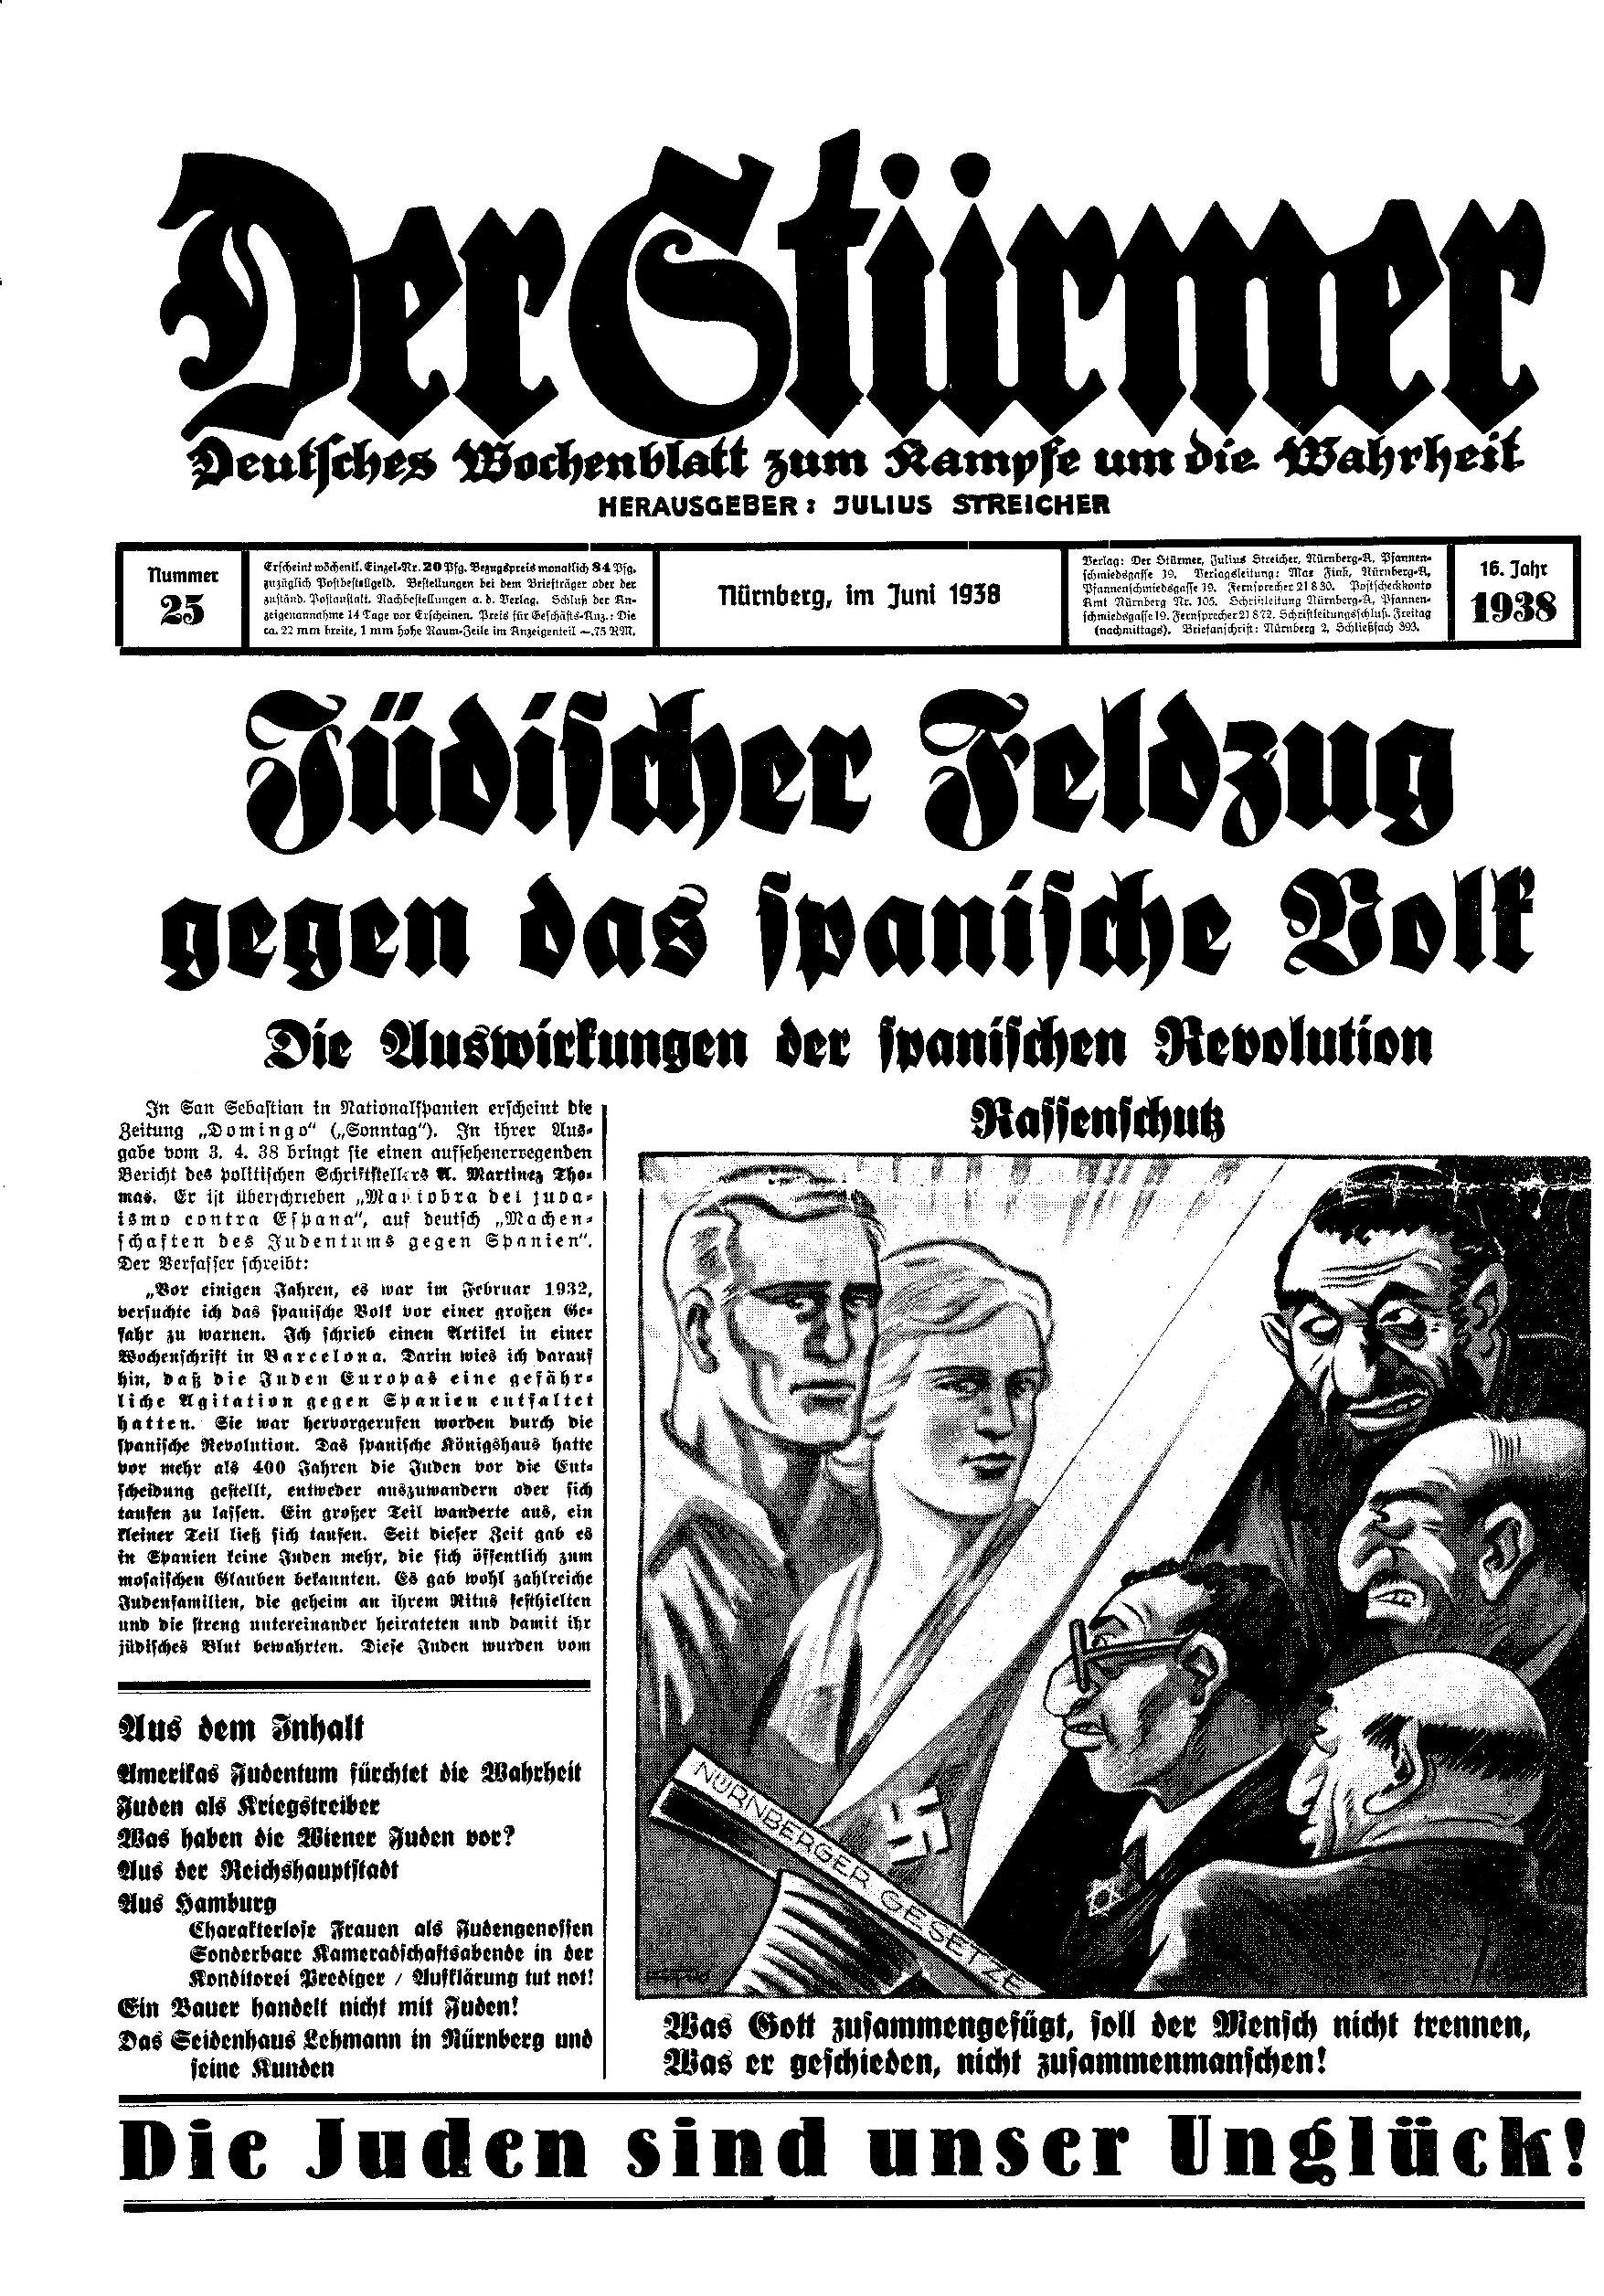 Der Stürmer - 1938 Nr. 25 - Jüdischer Feldzug gegen das spanische Volk